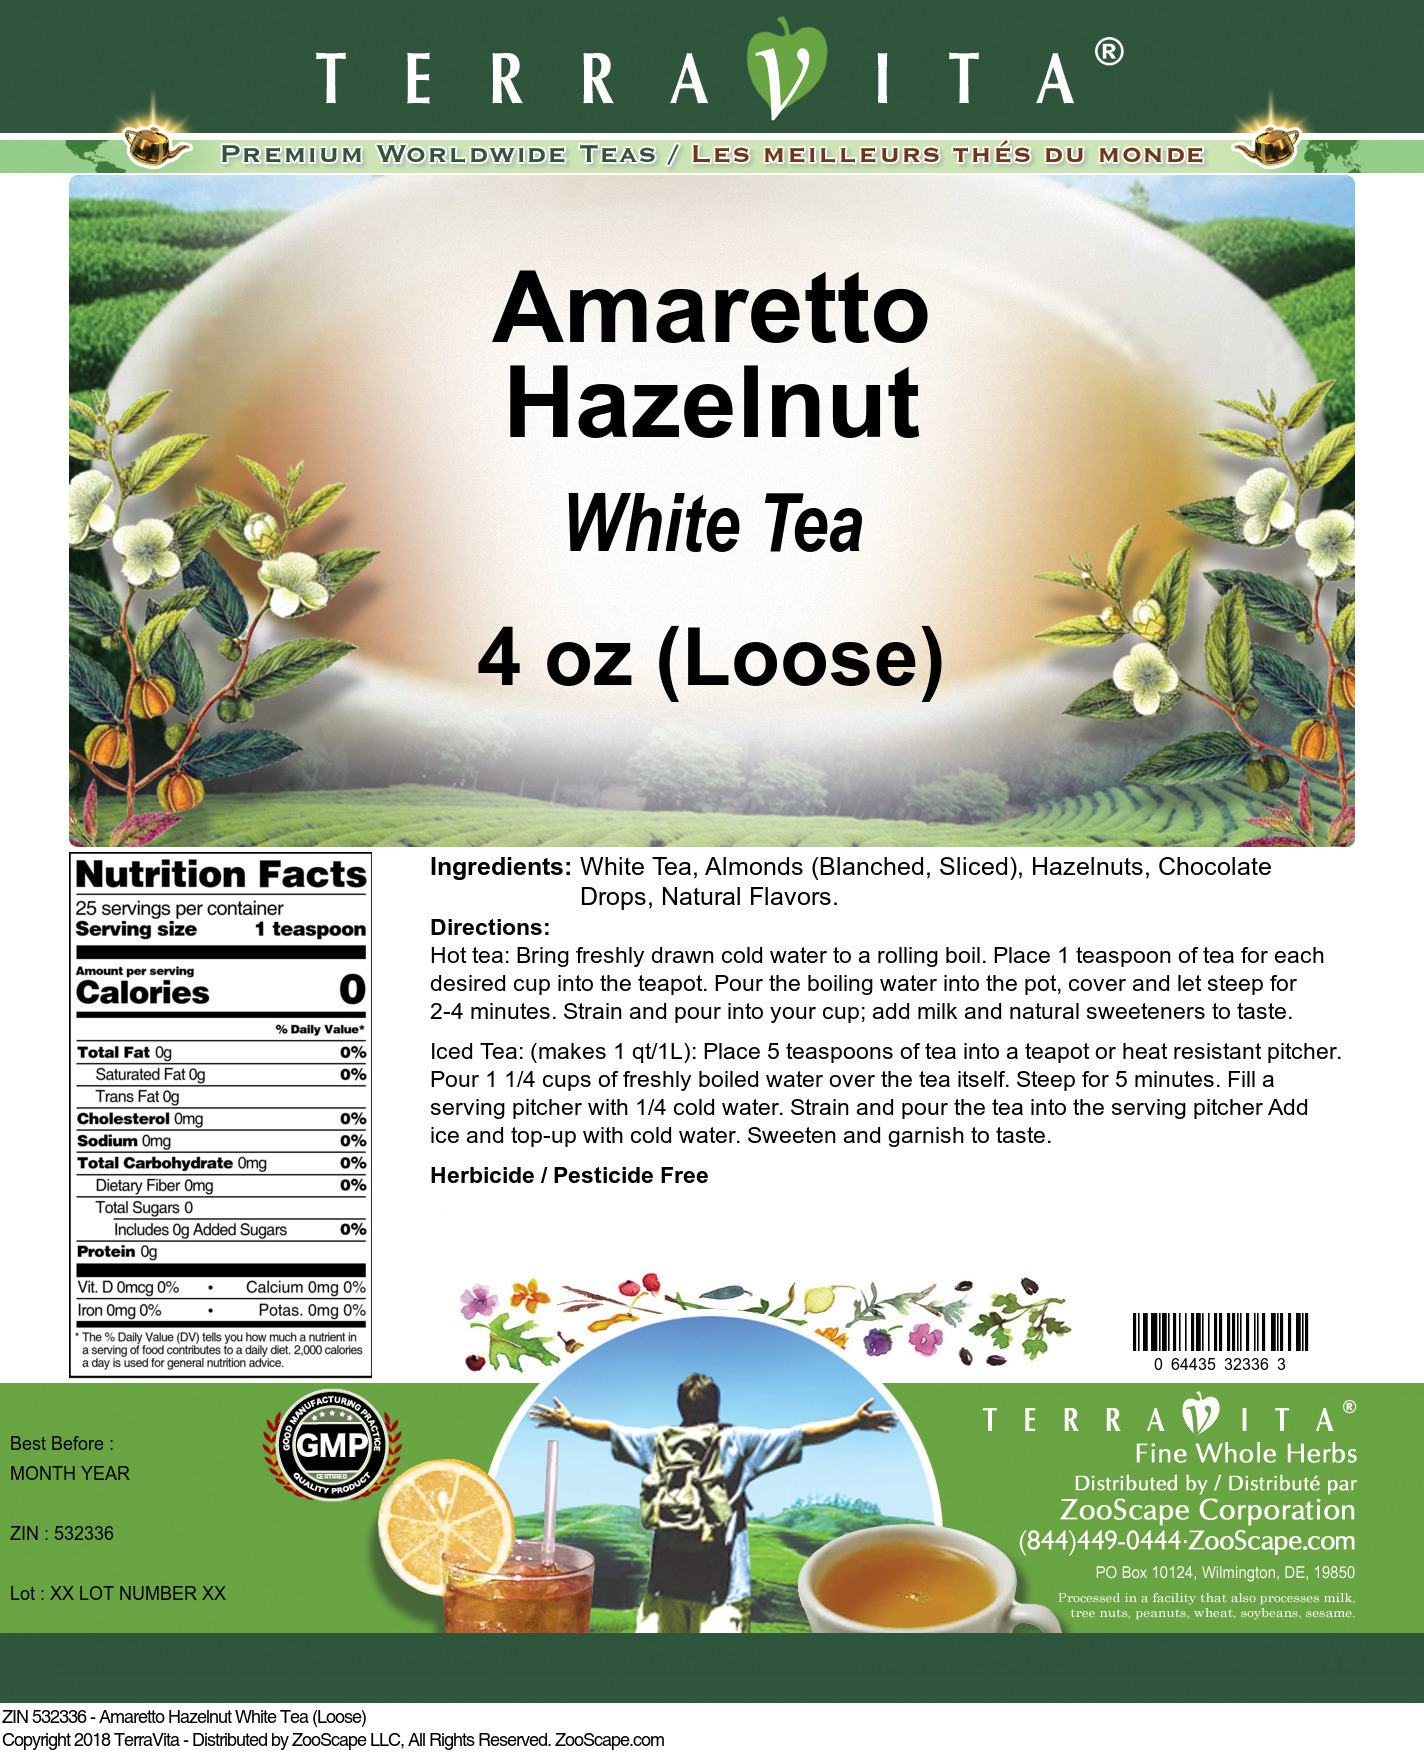 Amaretto Hazelnut White Tea (Loose) - Label